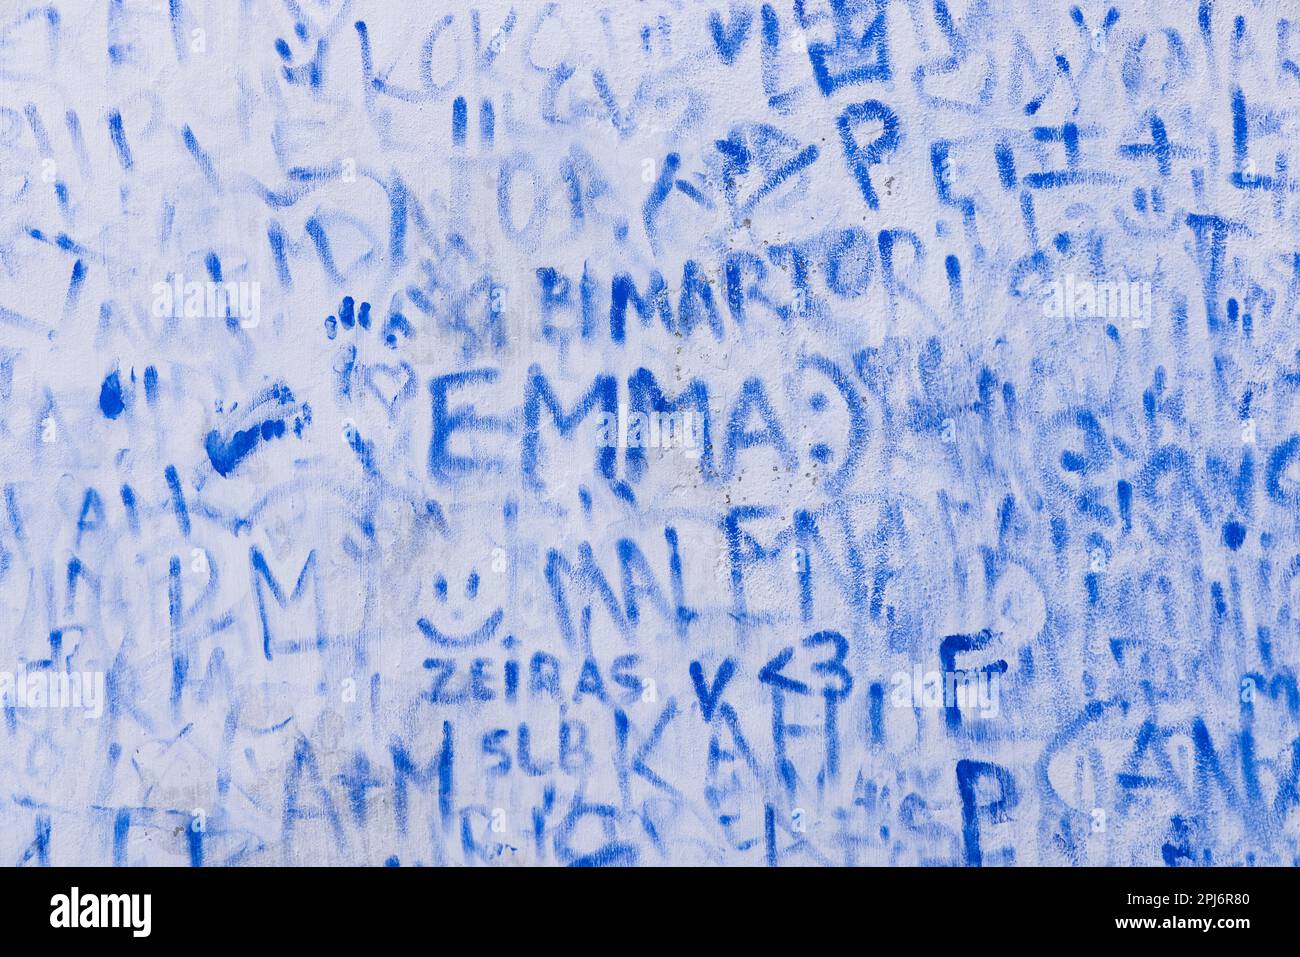 Europe, Portugal, Obidos. April 15, 2022. Blue graffiti names on a wall in Obidos. Stock Photo